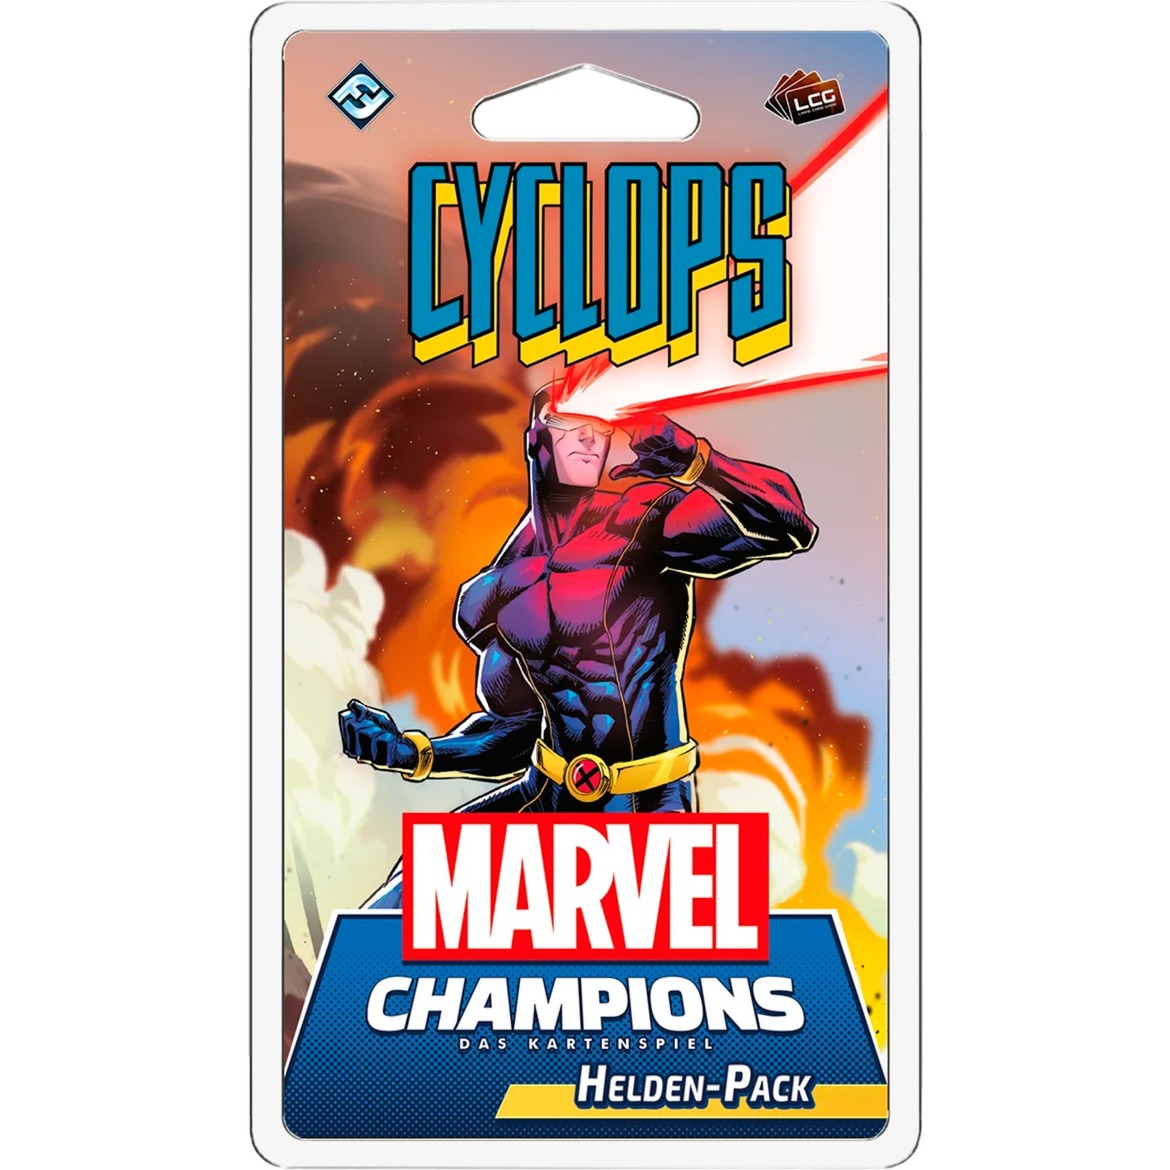 Marvel Champions: Das Kartenspiel - Cyclops (Helden-Pack) von Asmodee